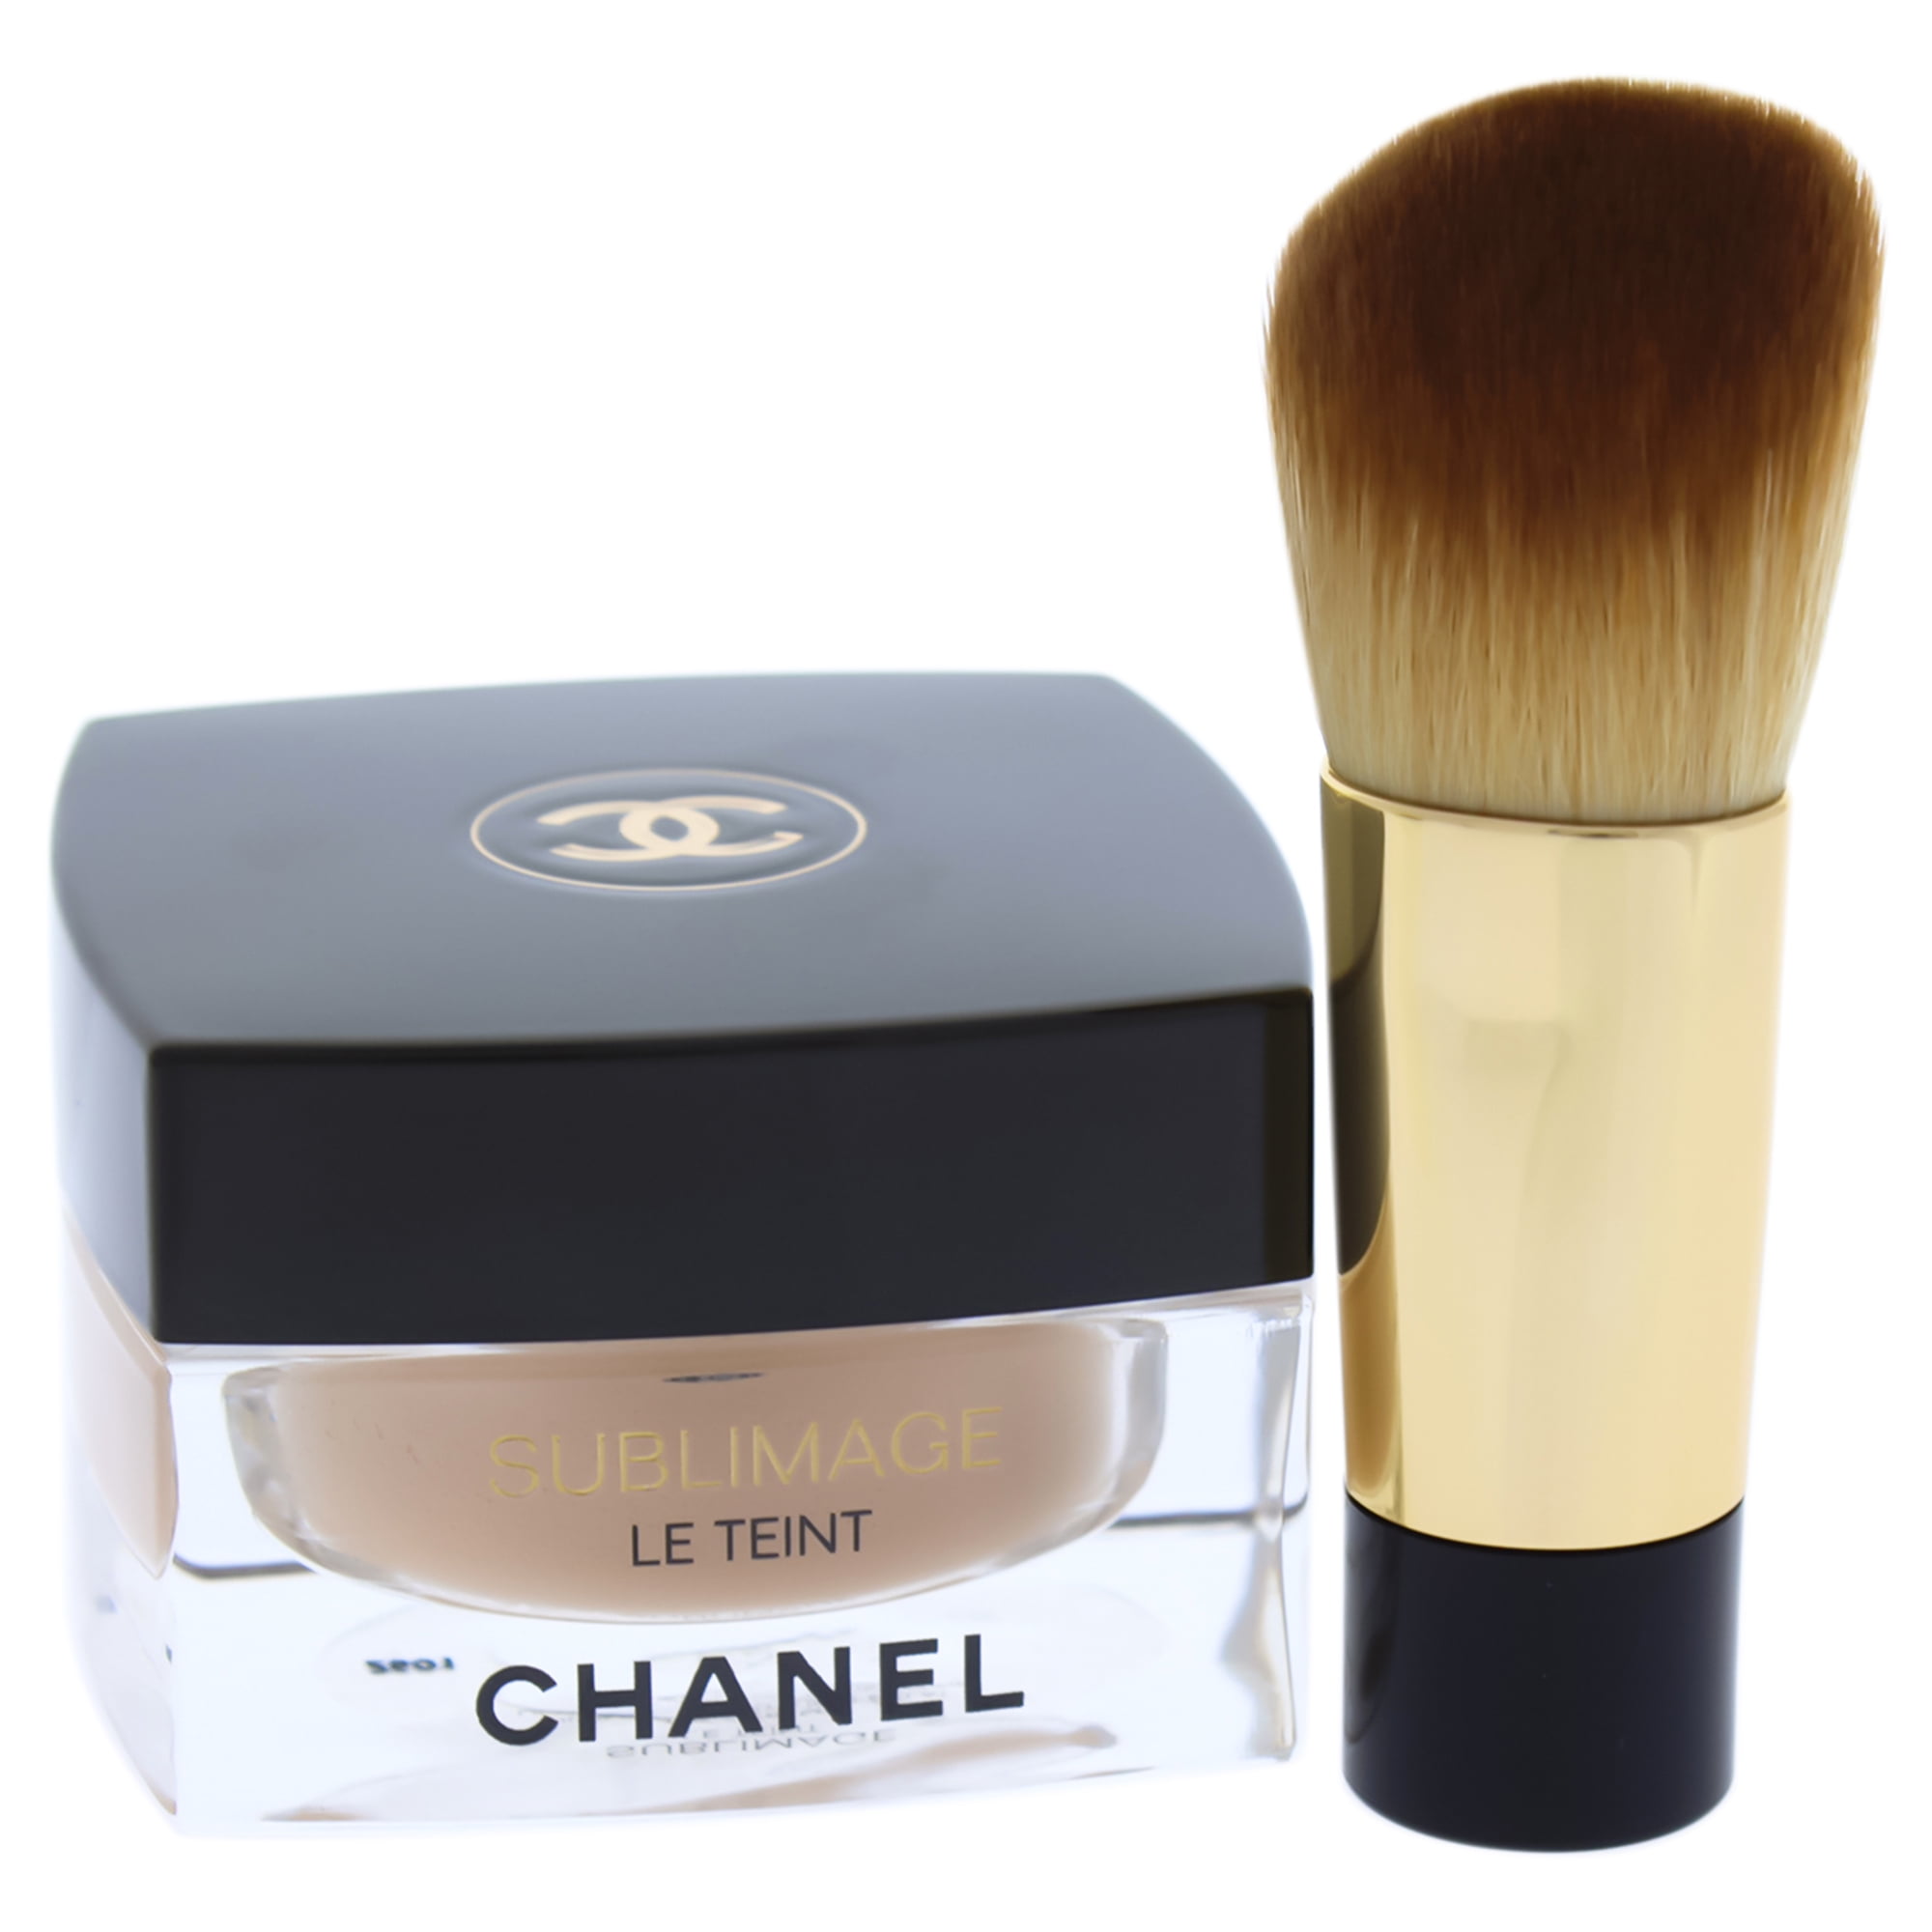 Chanel Sublimage Le Teint Ultimate Radiance Generating Cream Foundation - #  32 Beige Rose 30g/1oz